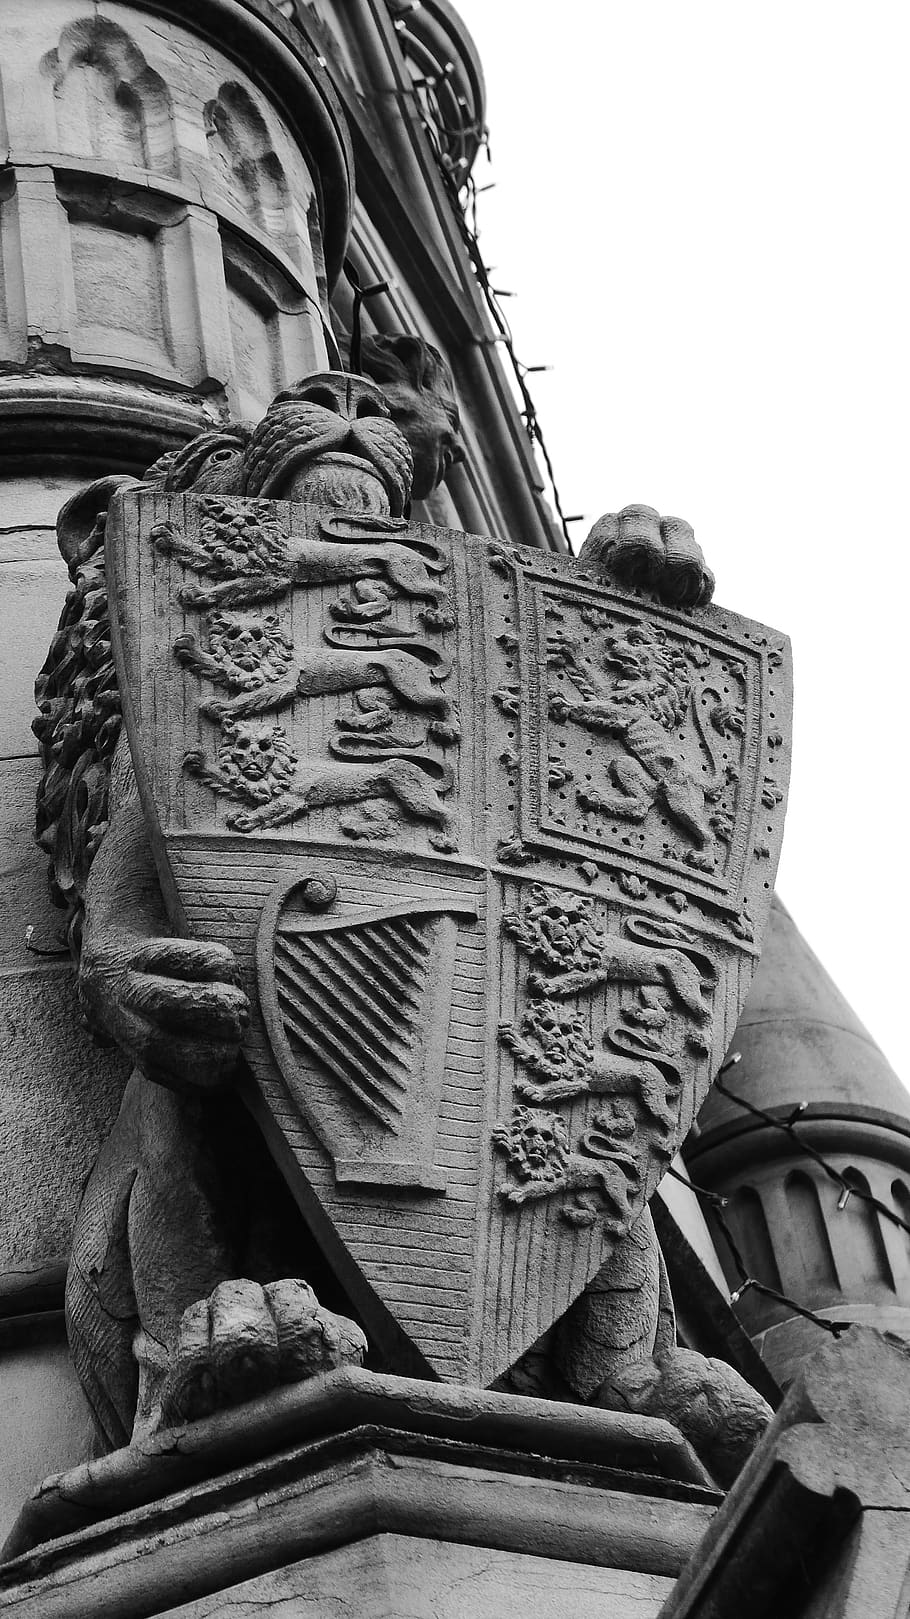 hitam dan putih, perisai, arsitektur, singa, bangunan, stratford upon avon, monumen, batu, warwickshire, shakespeare